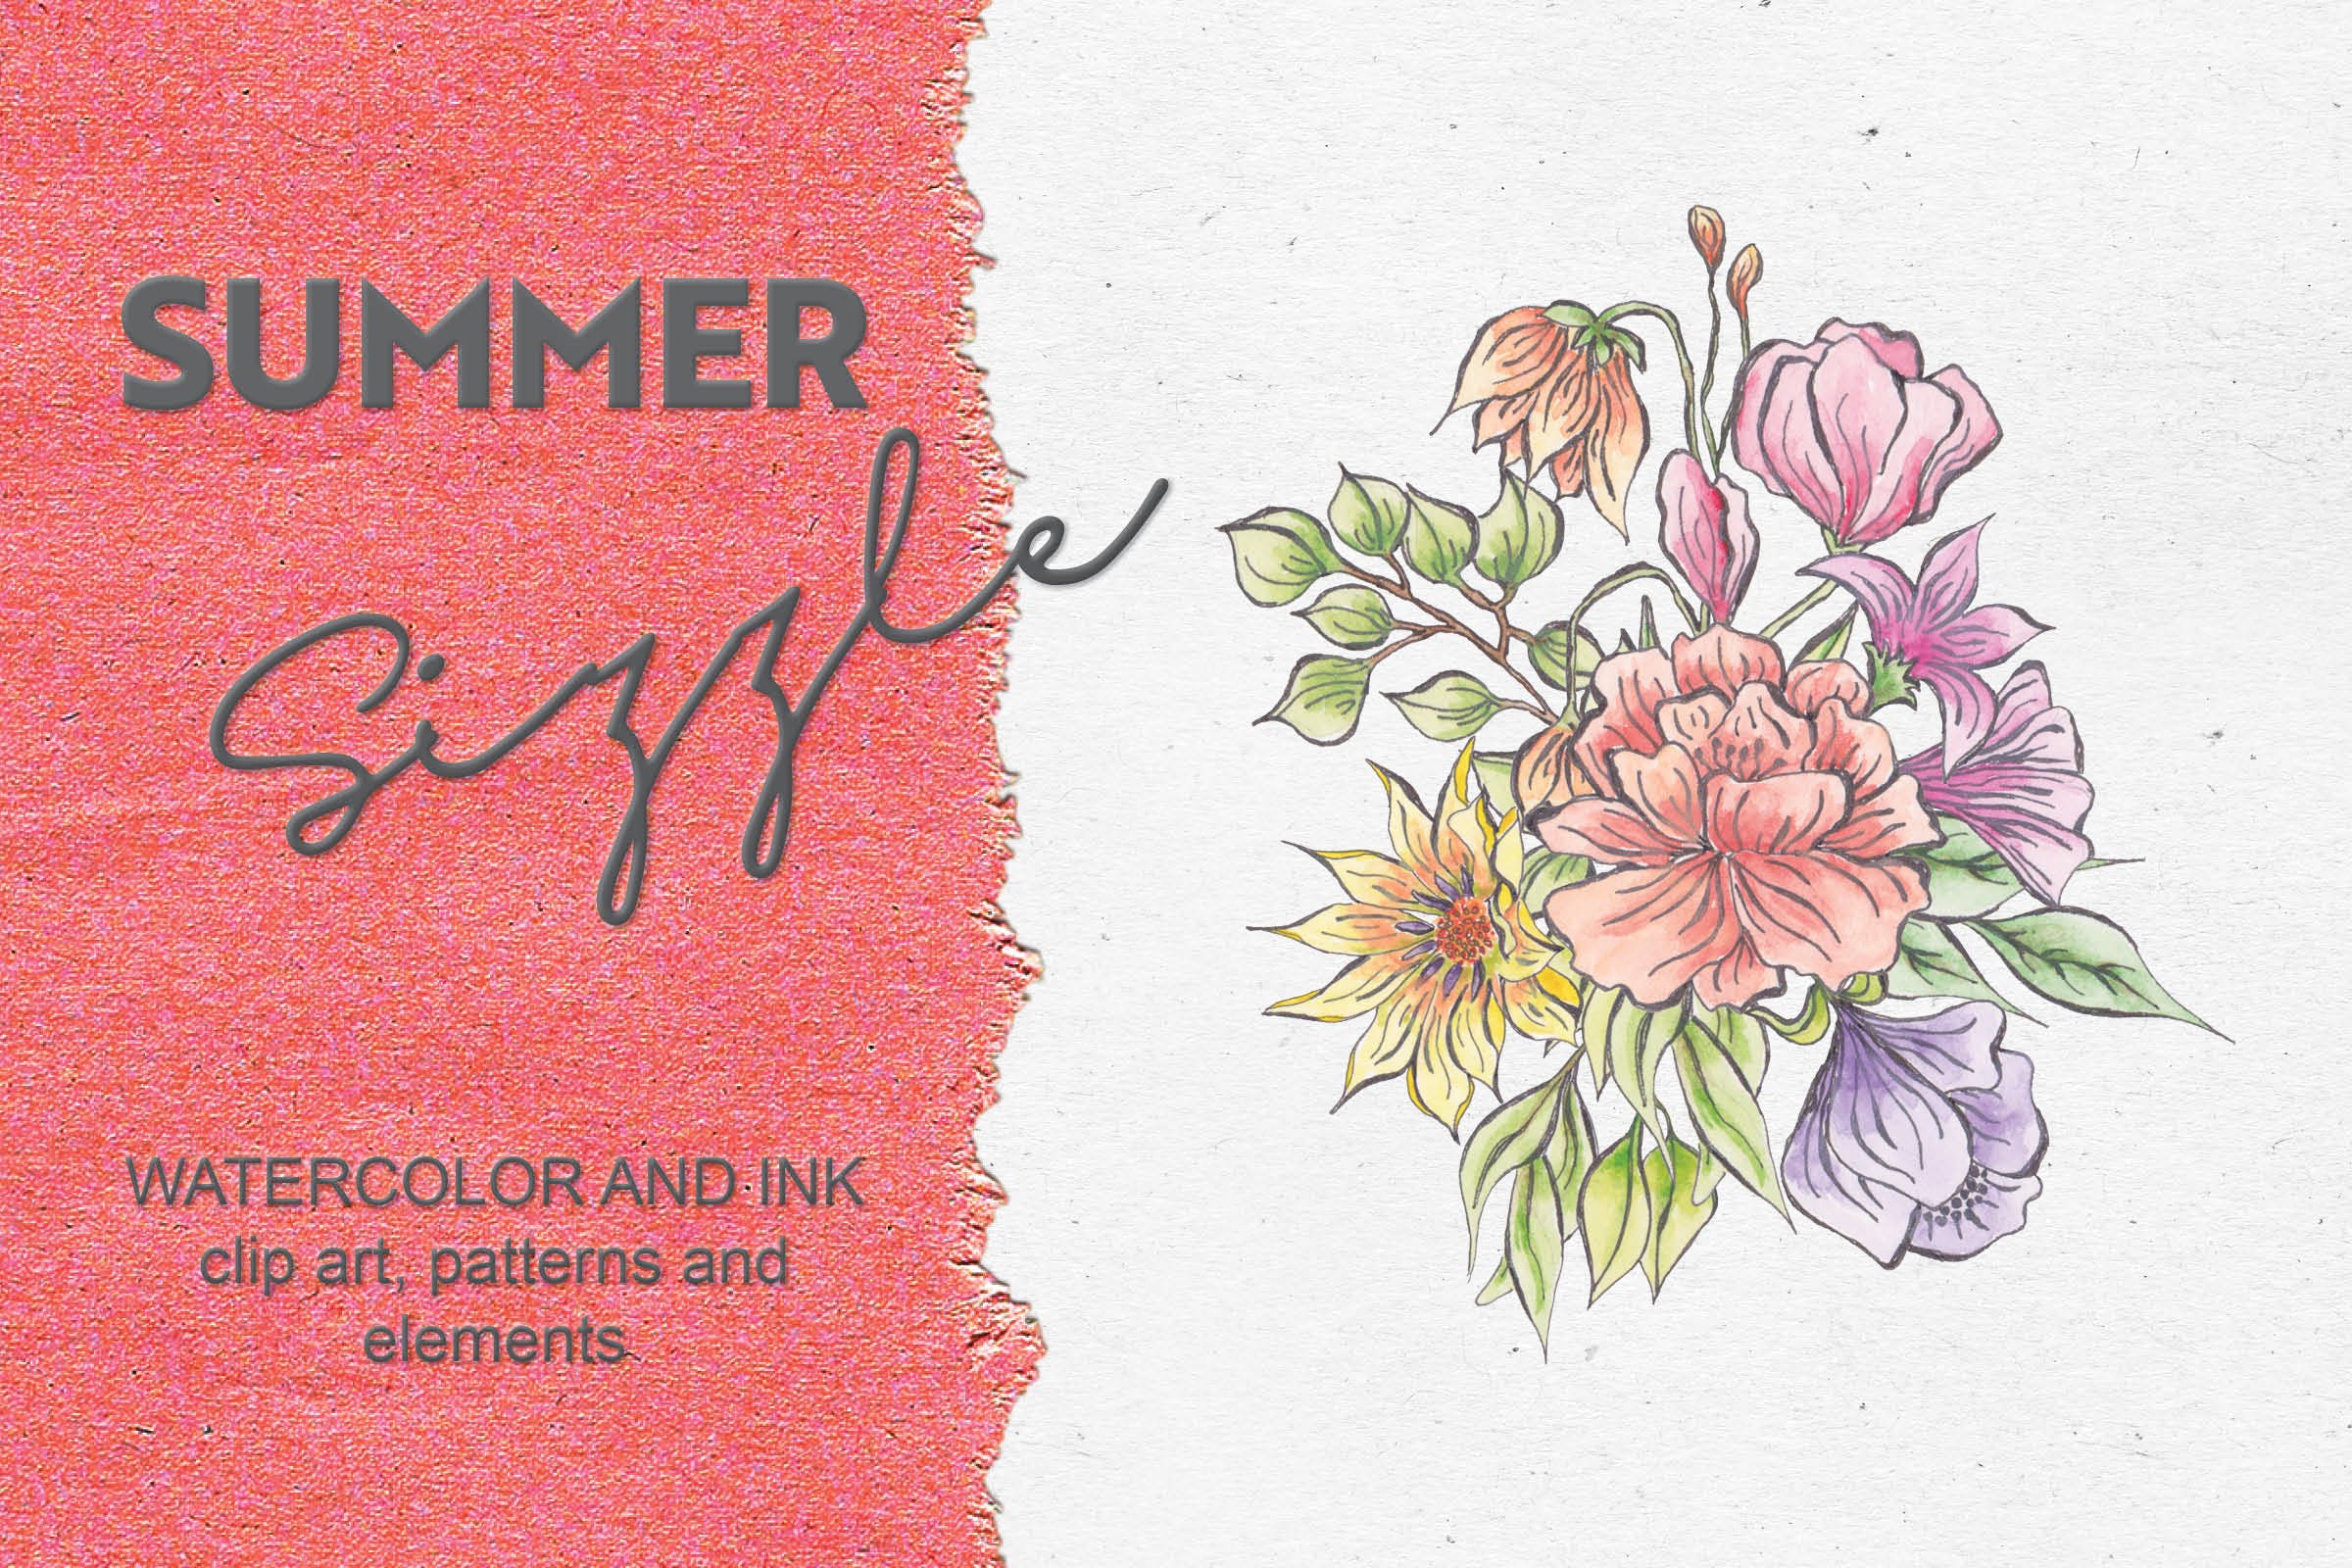 夏日鲜艳色彩水彩花卉设计第一素材精选PNG素材包 Summer Sizzle: Watercolor and Ink Collection插图